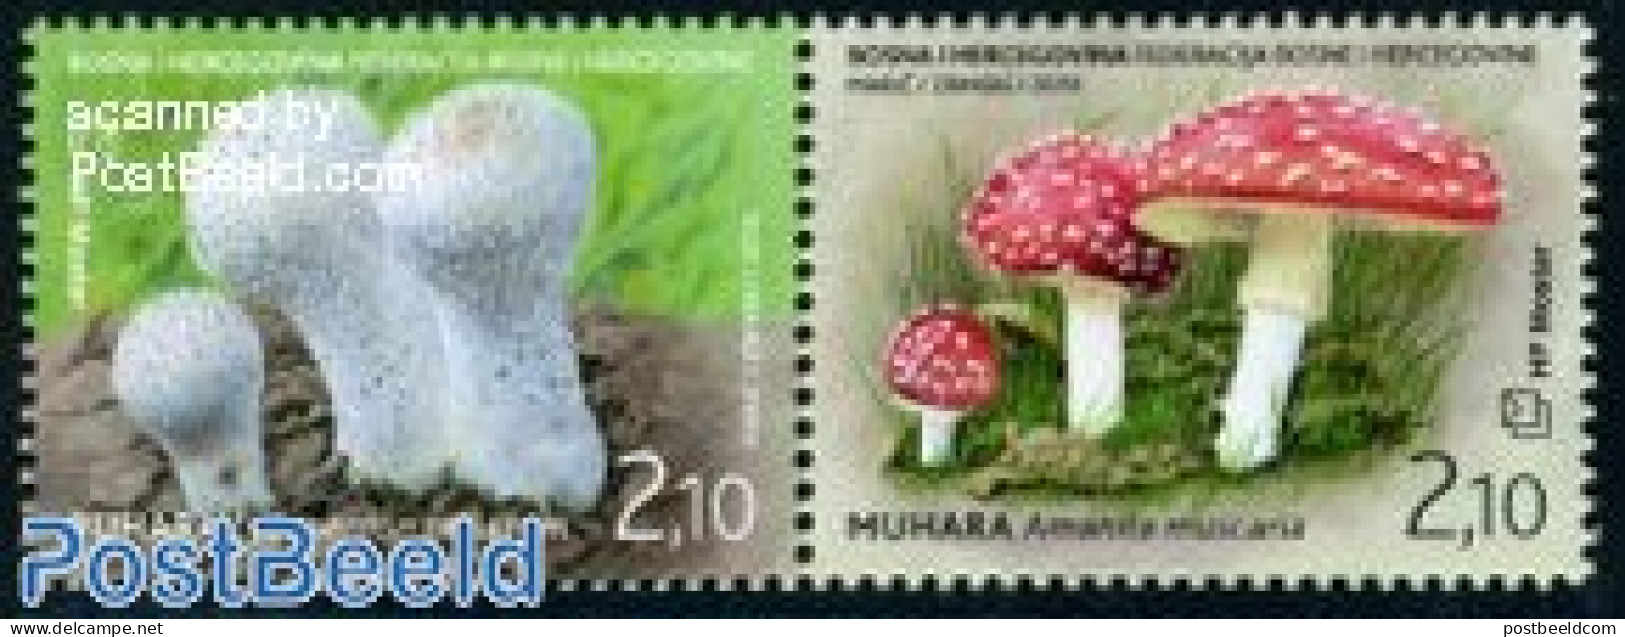 Bosnia Herzegovina - Croatic Adm. 2010 Mushrooms 2v [:], Mint NH, Nature - Mushrooms - Funghi